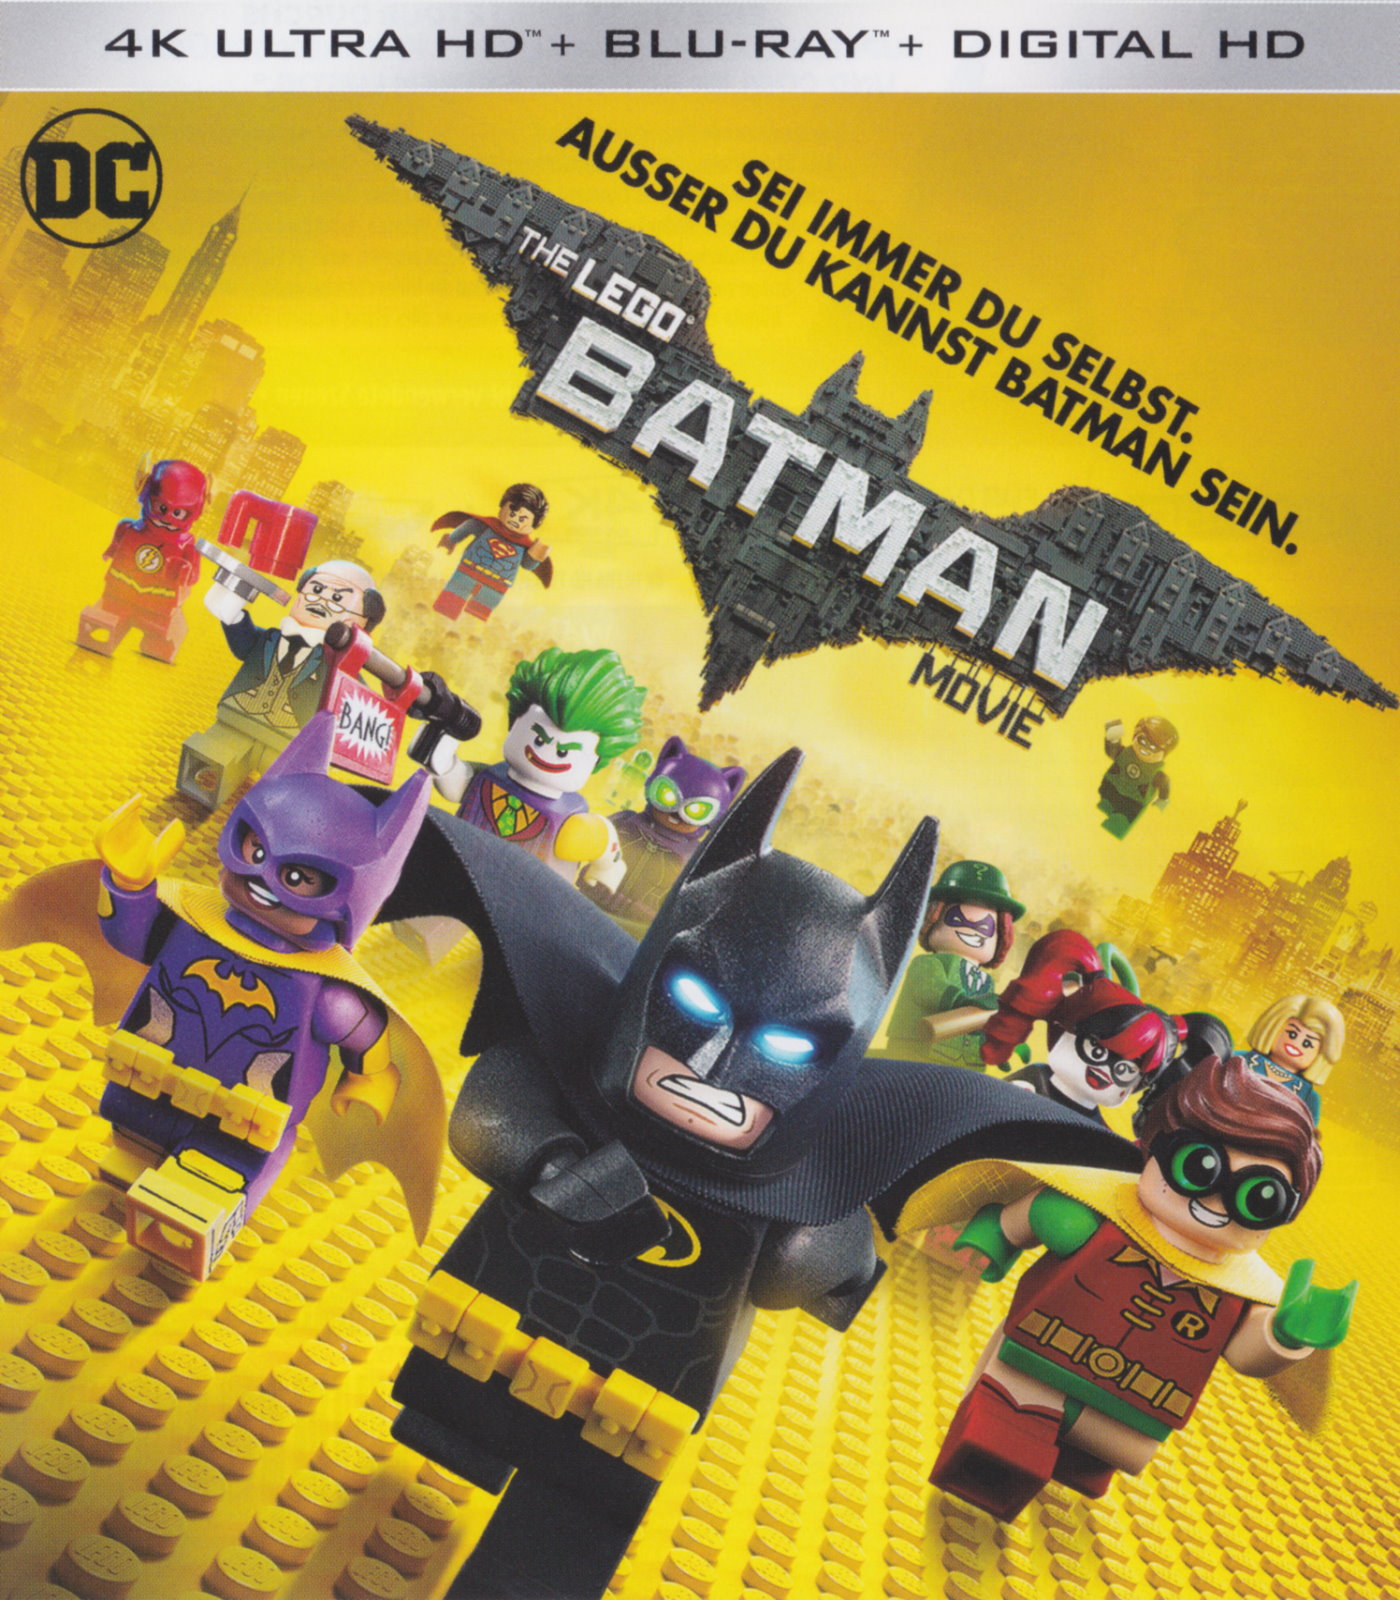 Cover - The LEGO Batman Movie.jpg